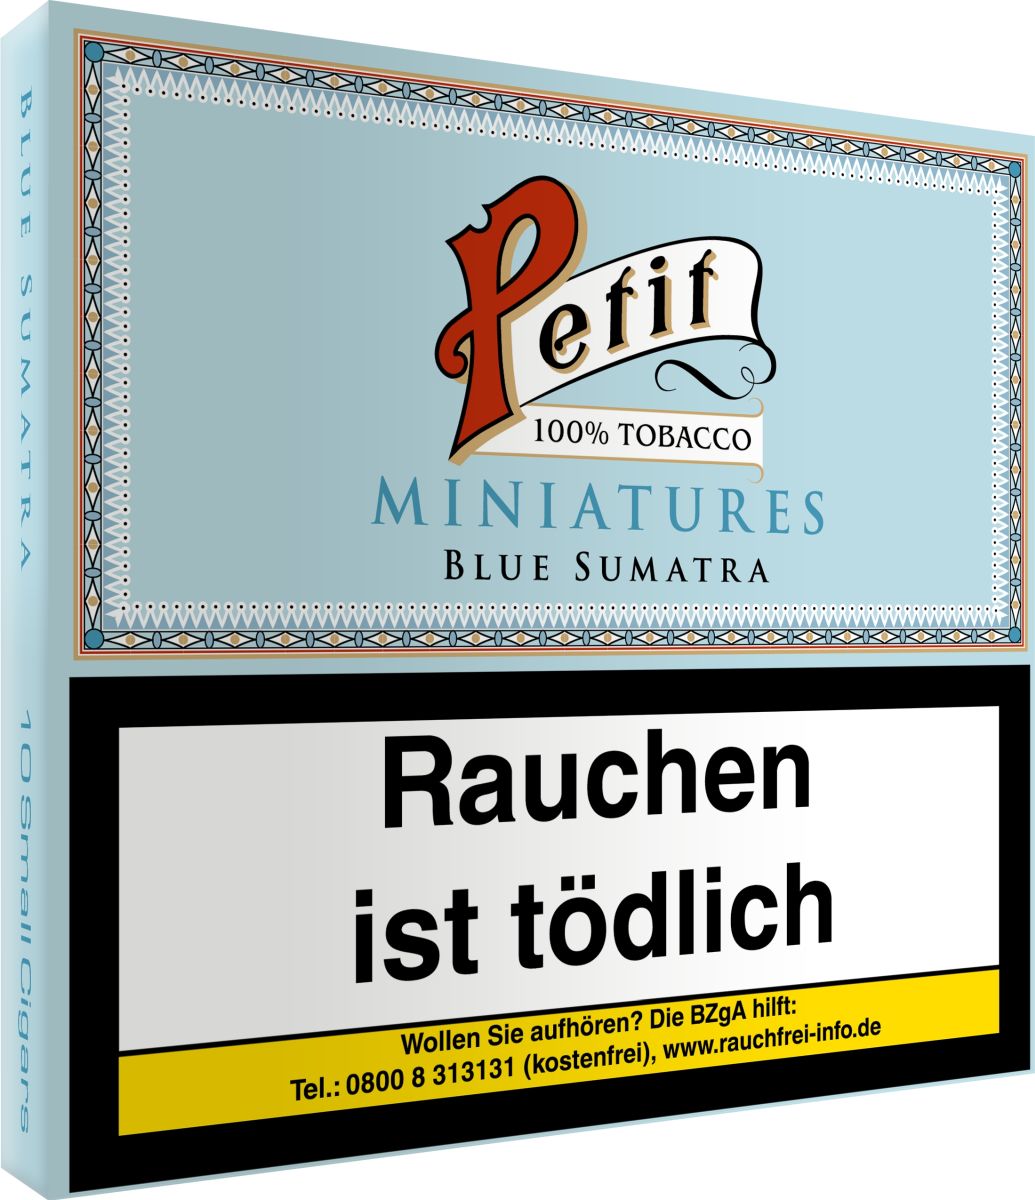 Nobel Petit Nobel Petit Miniatures Blue Sumatra bei www.Tabakring.de kaufen